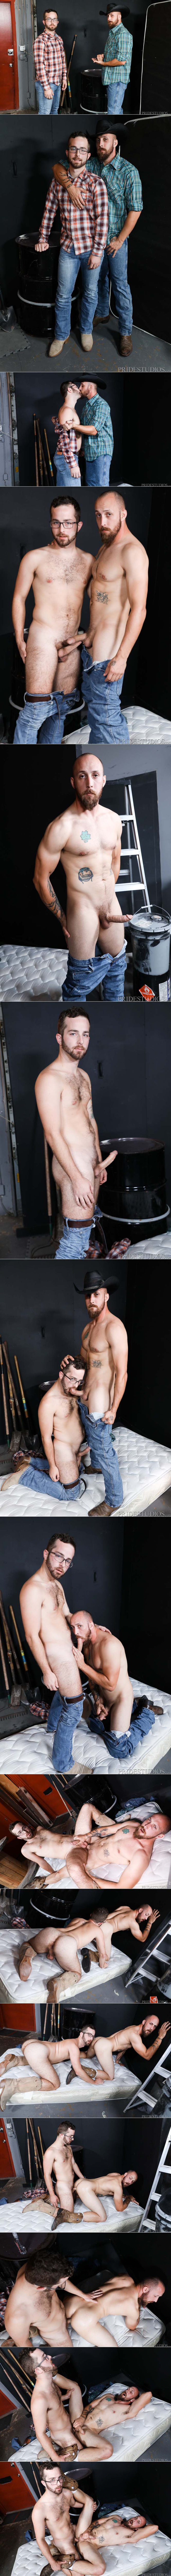 Cowboy Lovers (Jay Donahue Fucks Dustin Steele) at MenOver30.com